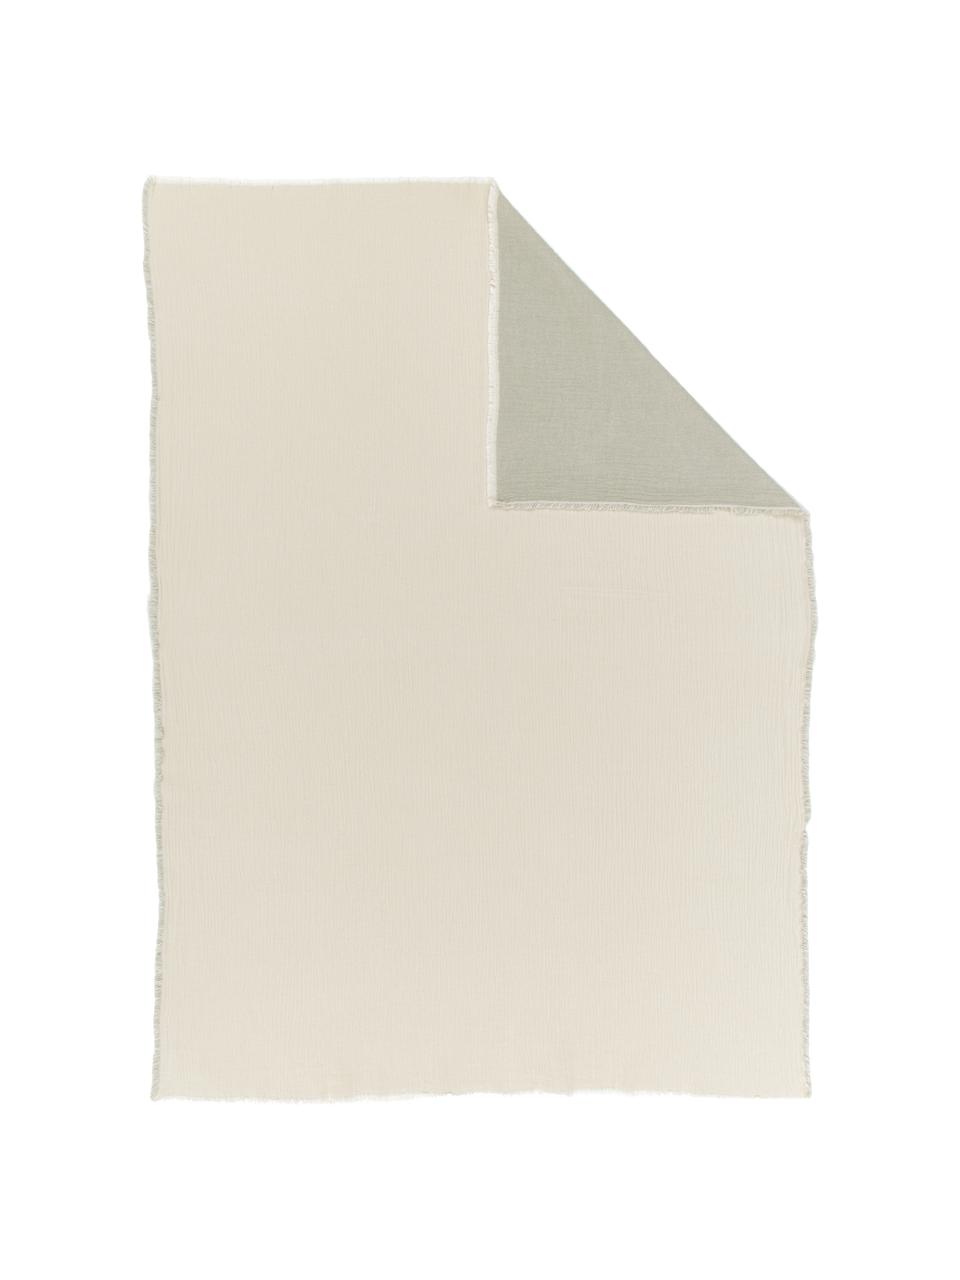 Plaid reversibile in cotone bianco crema/verde con frange Thyme, 100% cotone biologico, Verde, bianco crema, Larg. 130 x Lung. 180 cm